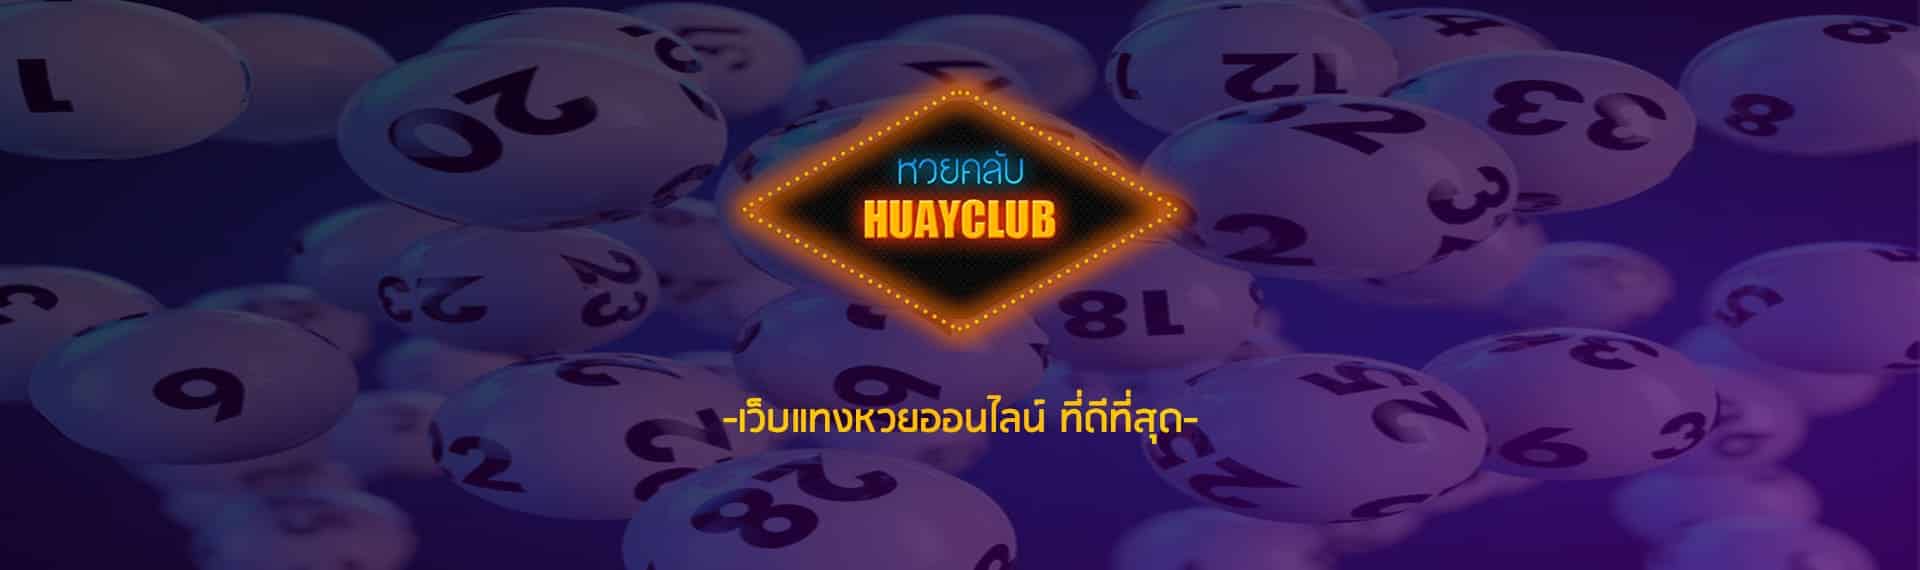 huayclub lotto 3